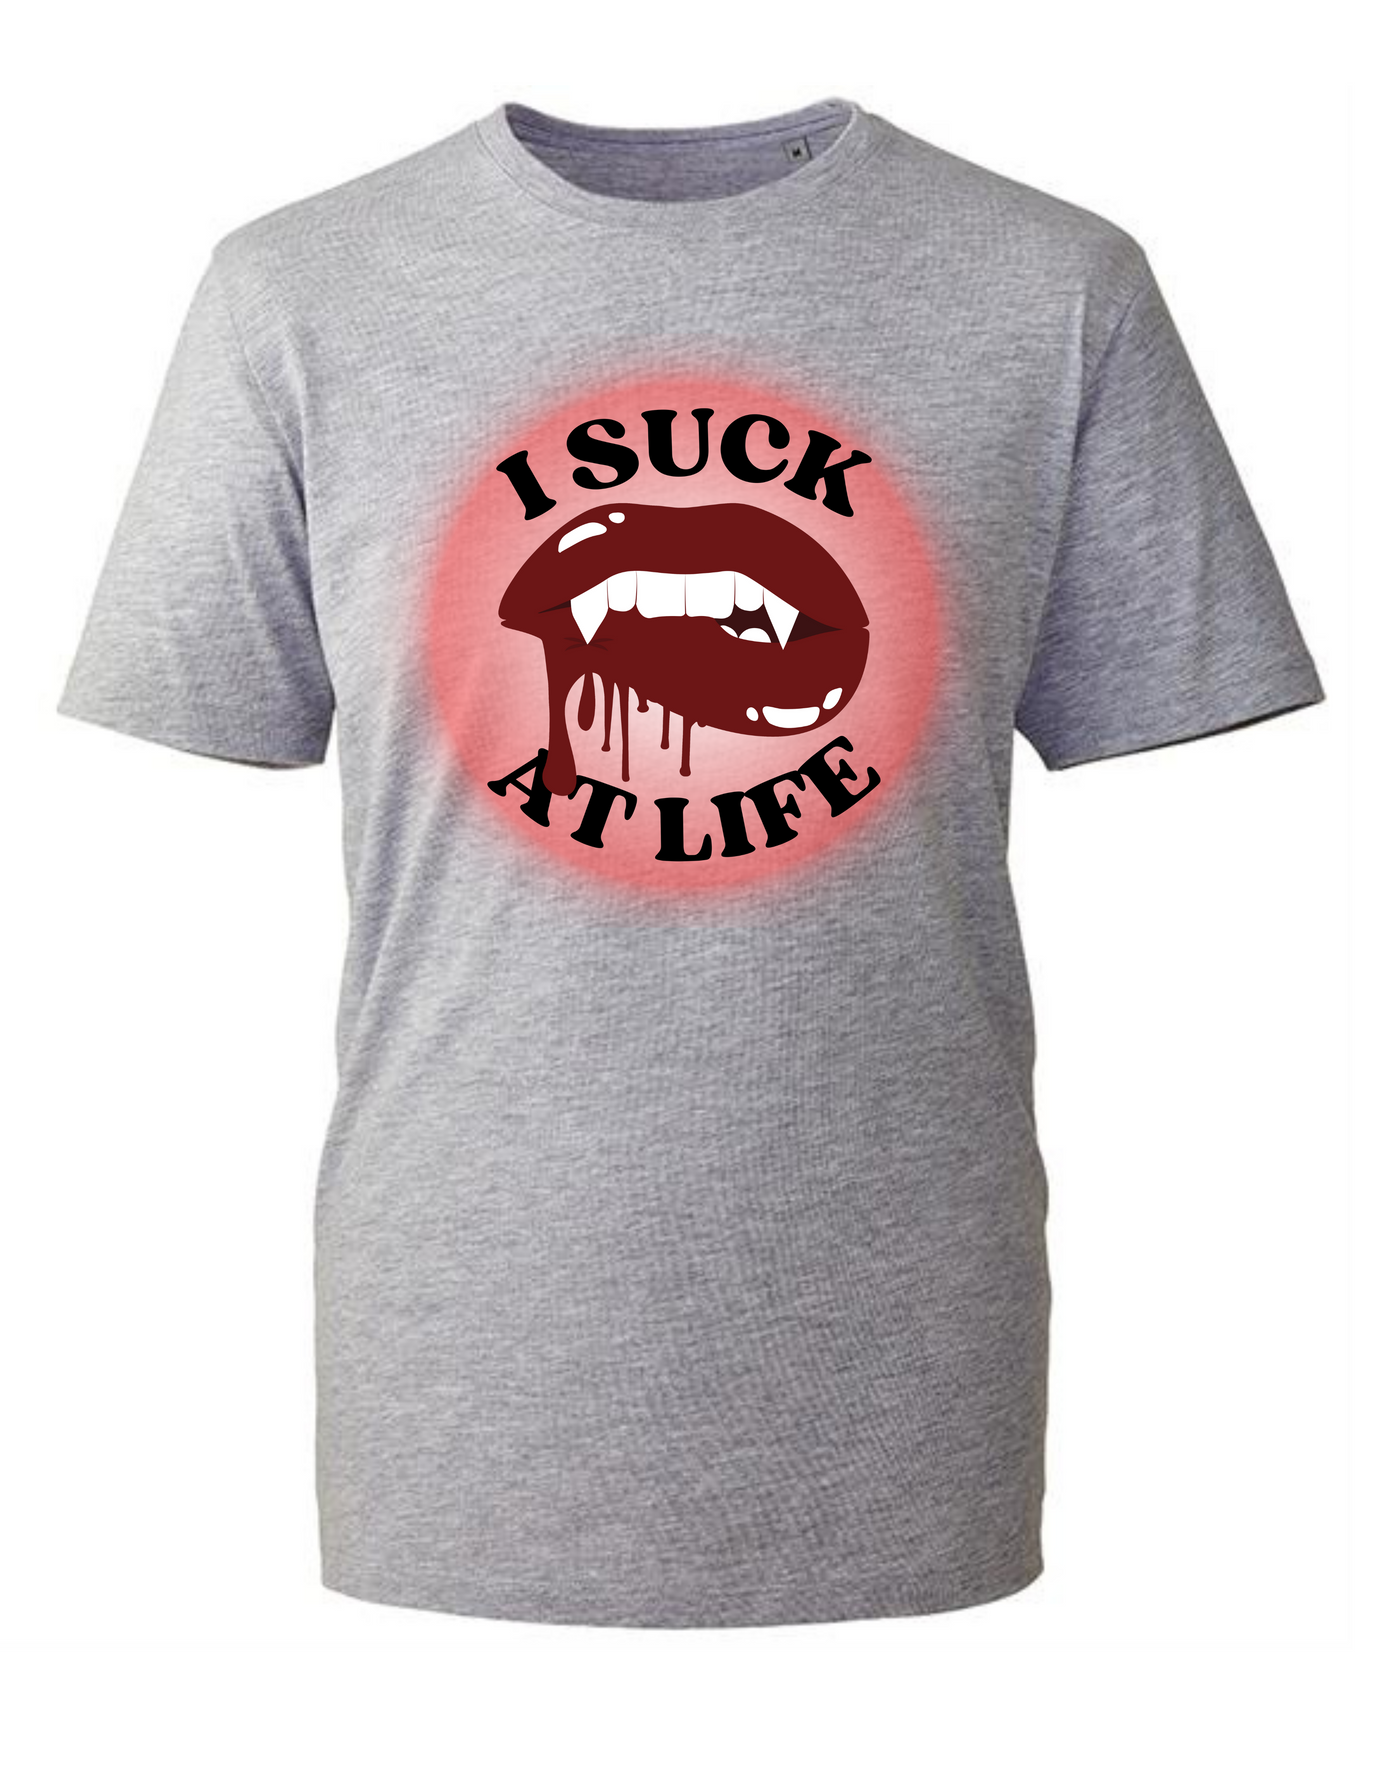 "I Suck At Life" Unisex Organic T-Shirt